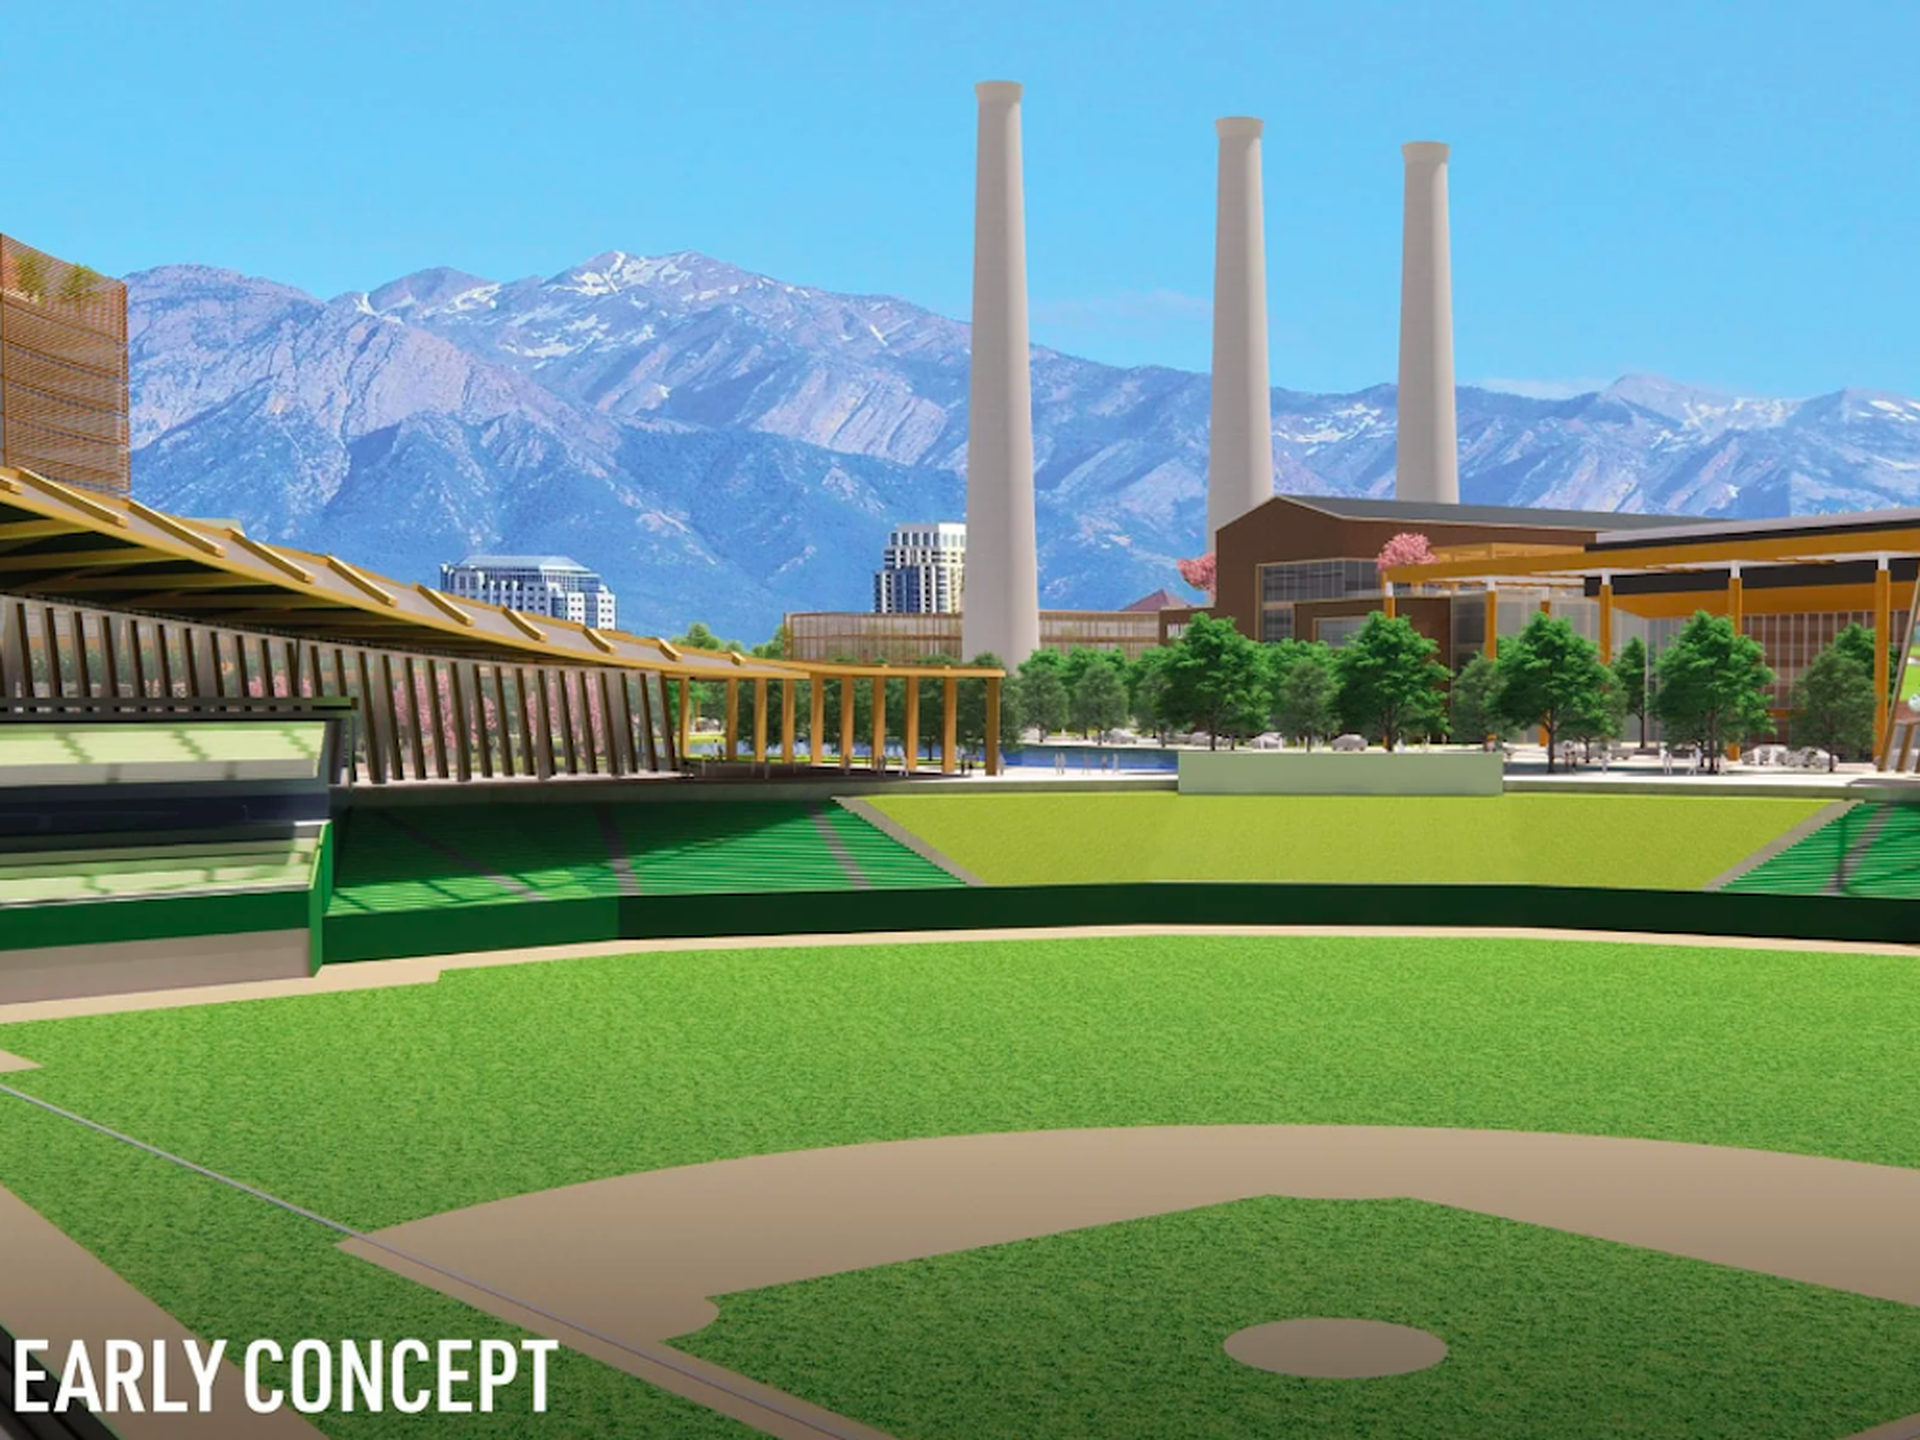 Salt Lake City seeks Major League Baseball expansion team - Axios